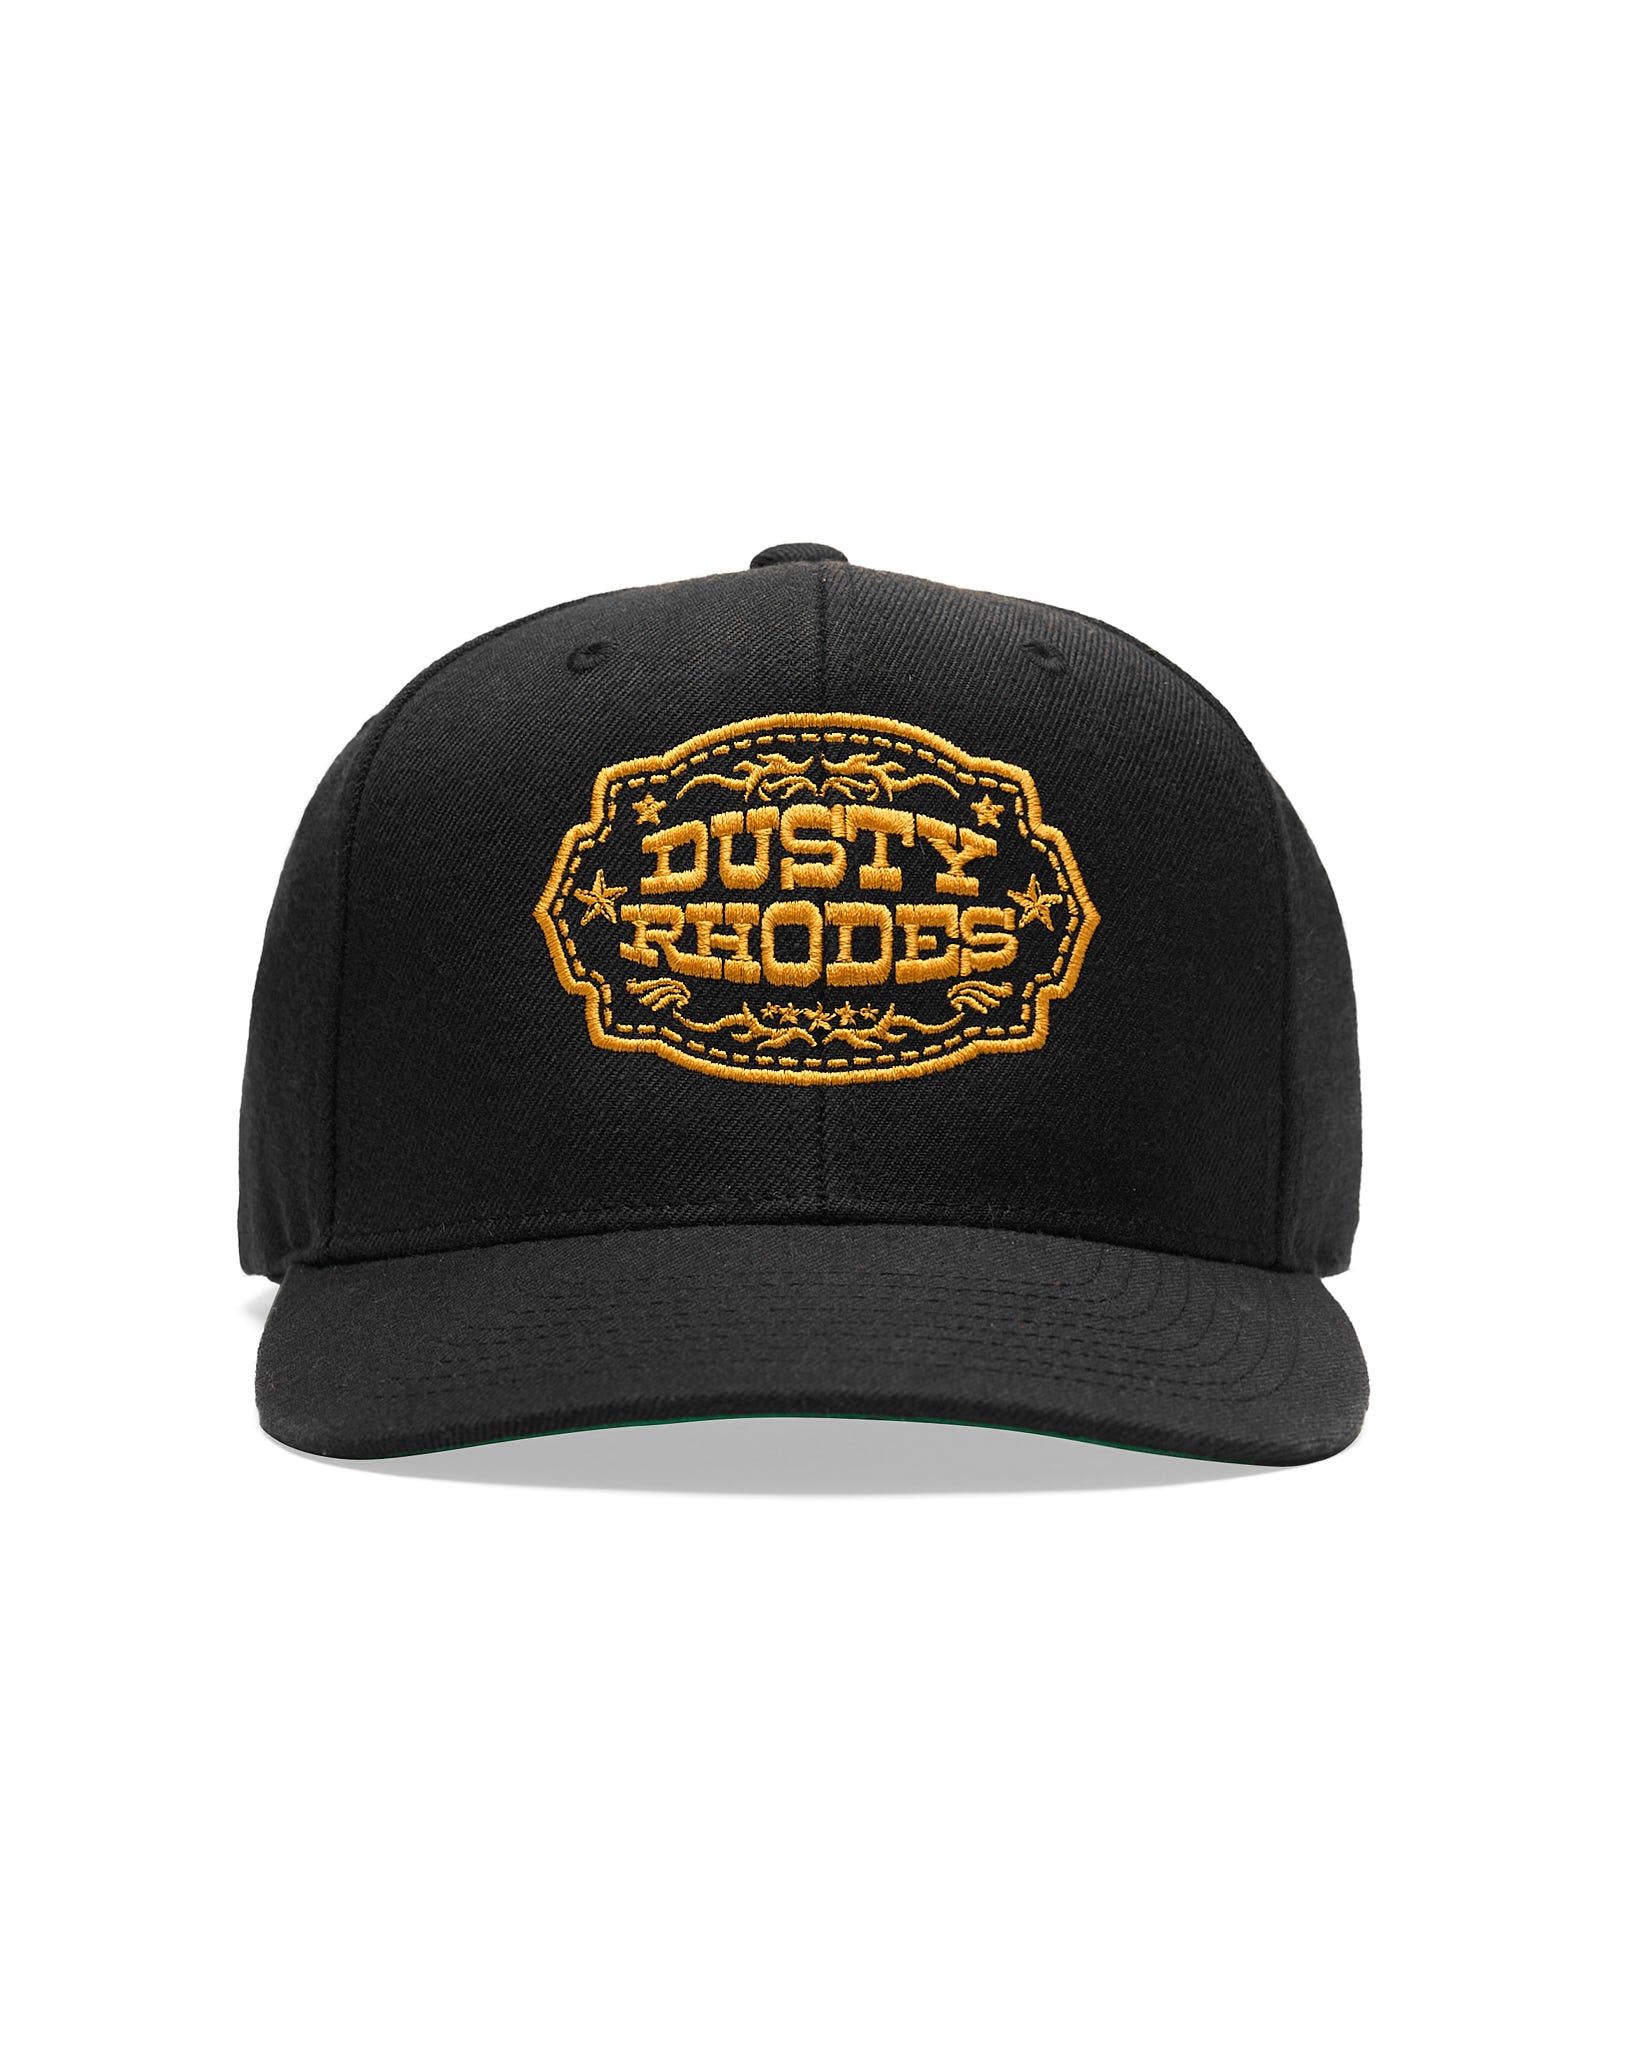 Dusty Rhodes American Dream Buckle Snapback Hat